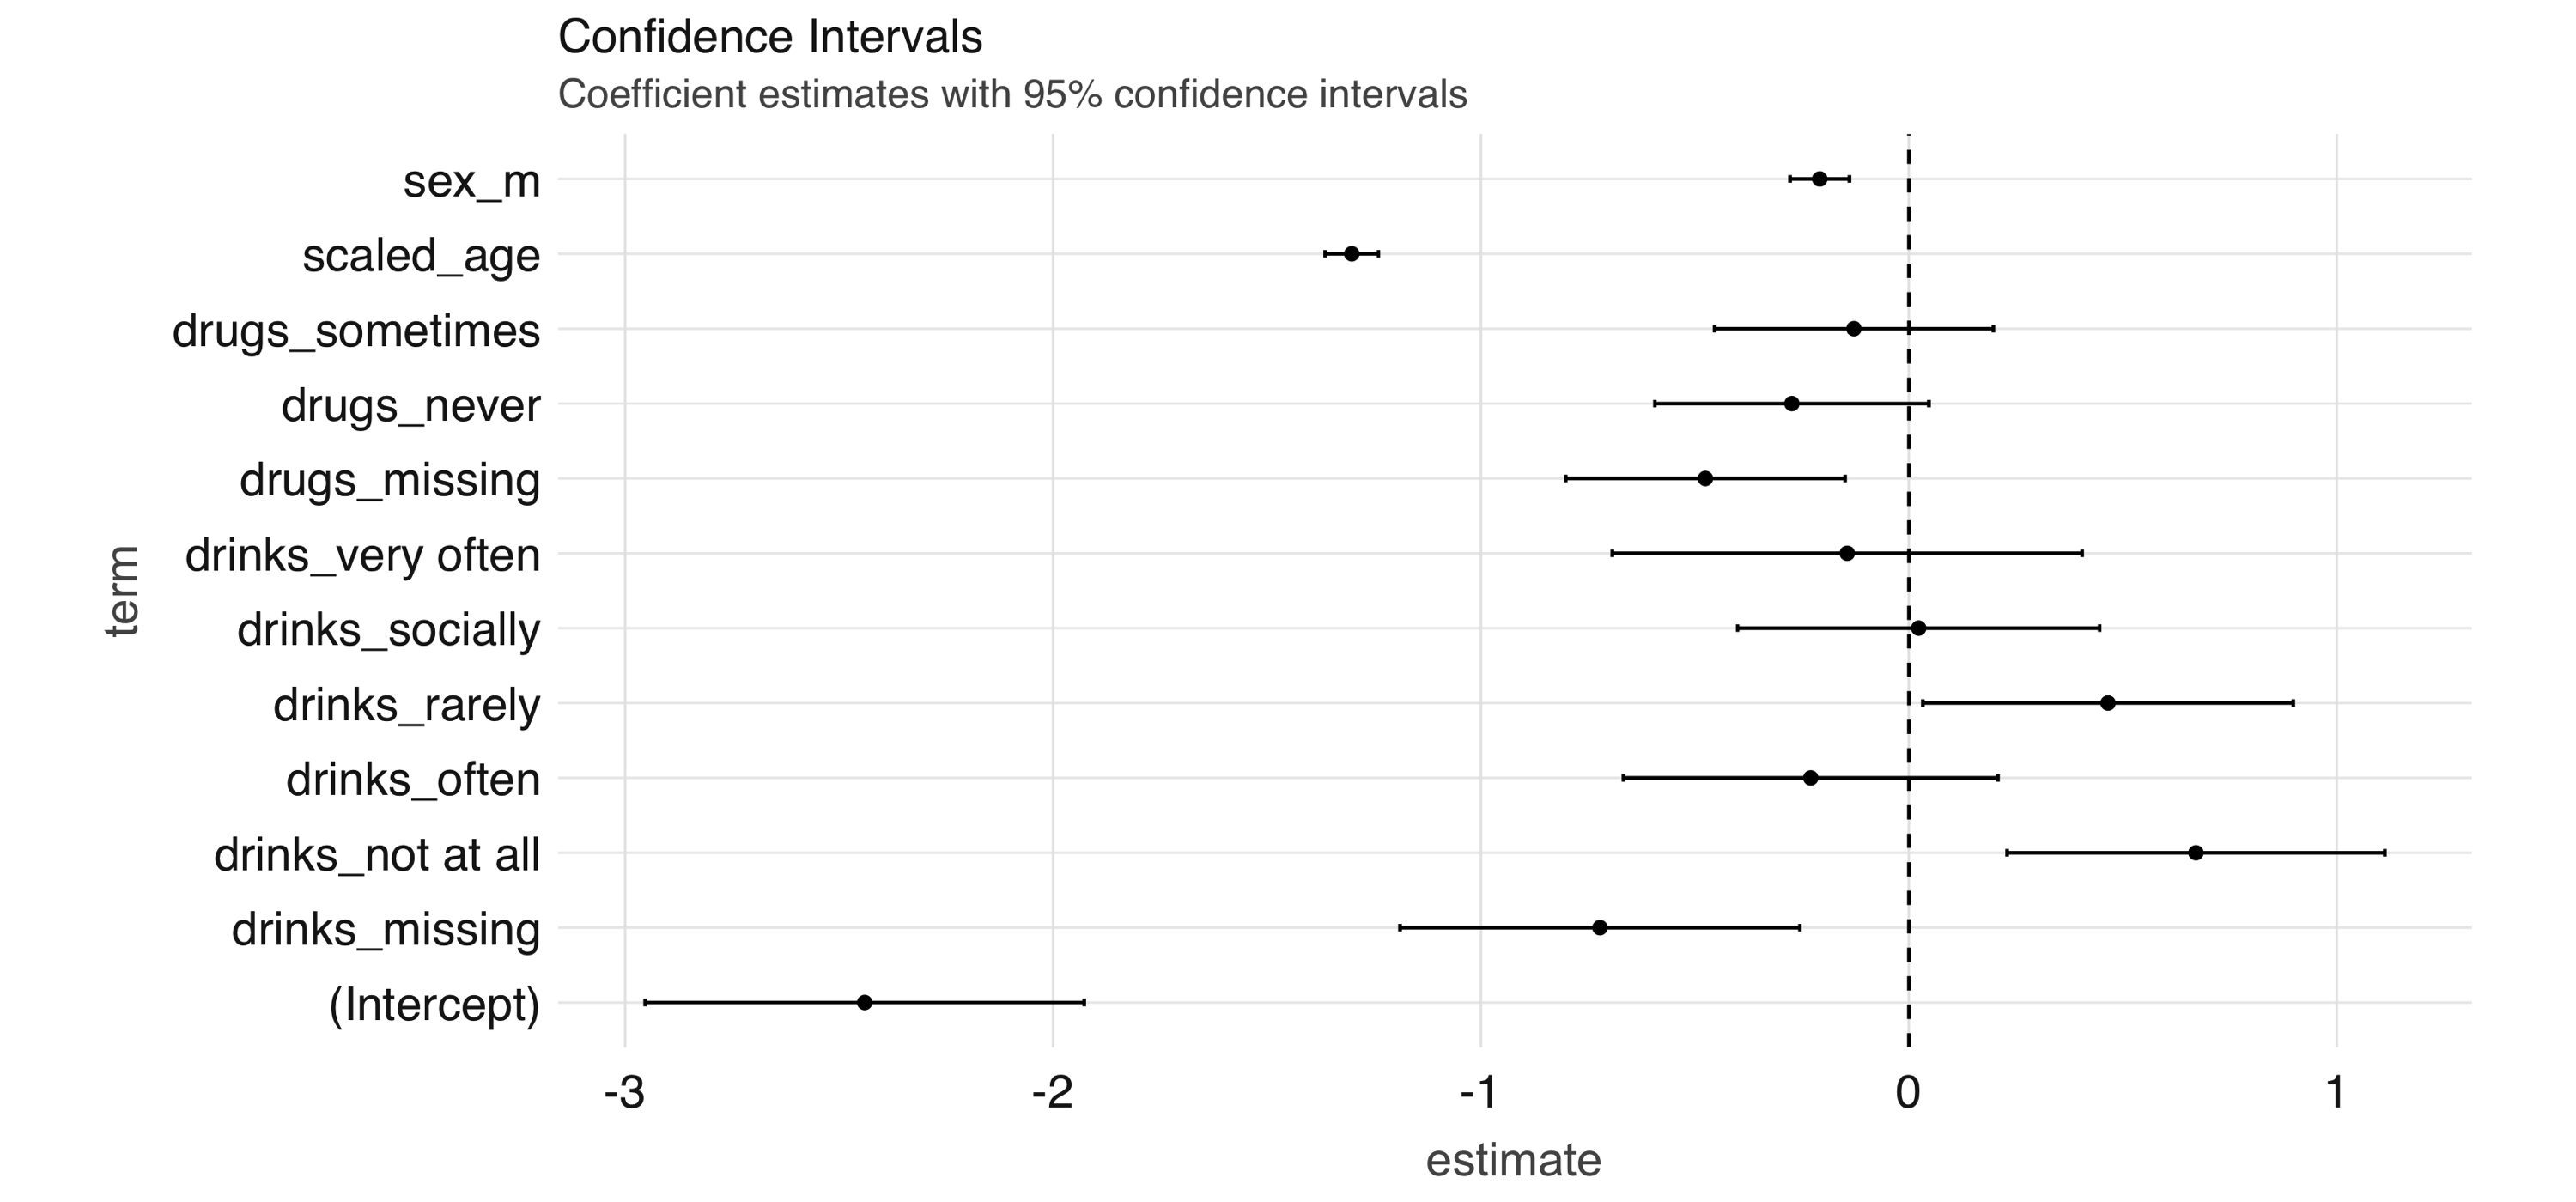 Coefficient estimates with 95% confidence intervals